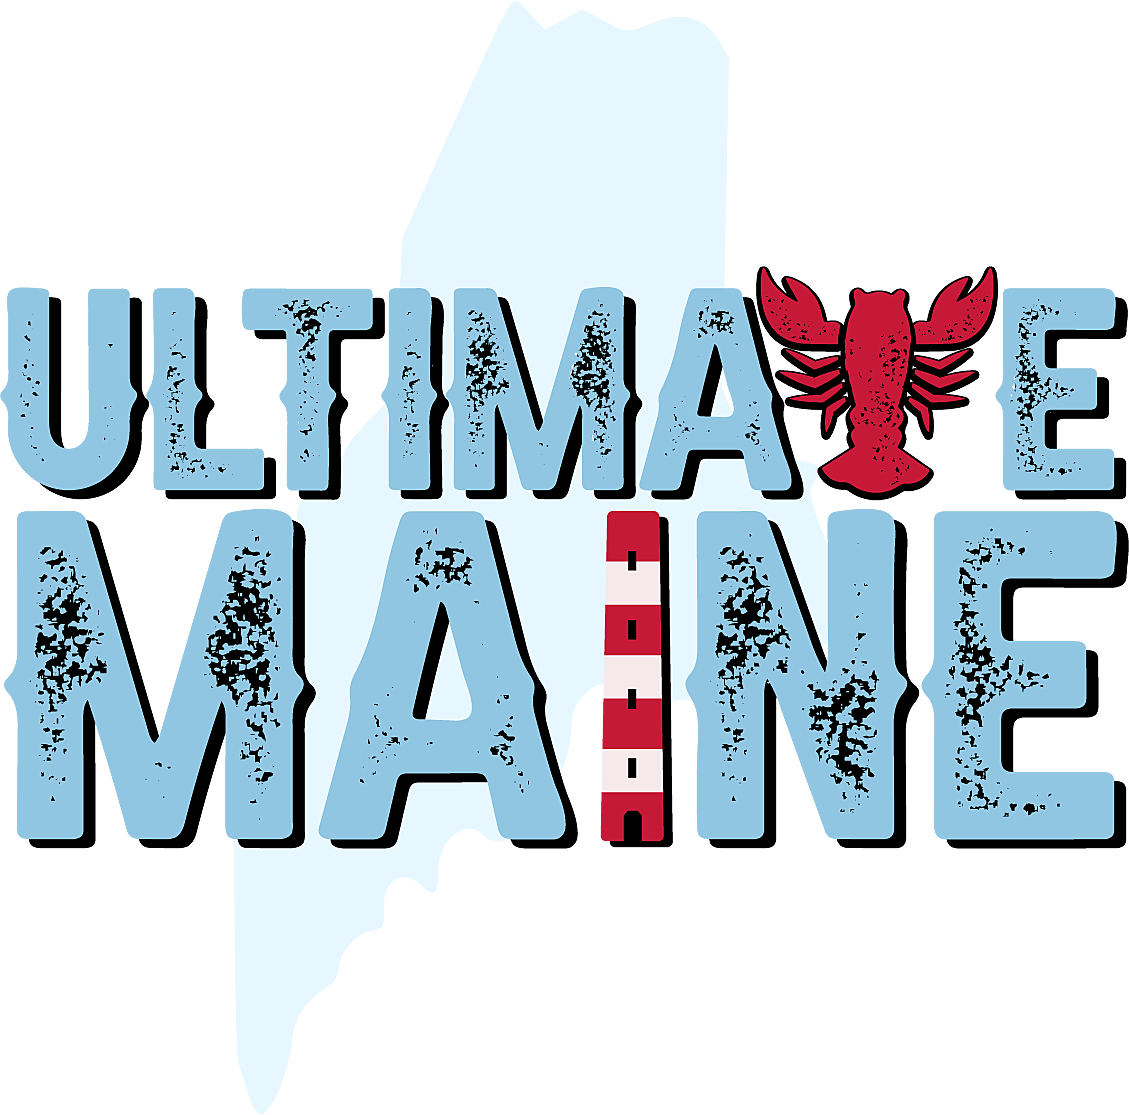 ultimate-maine-everything-maine